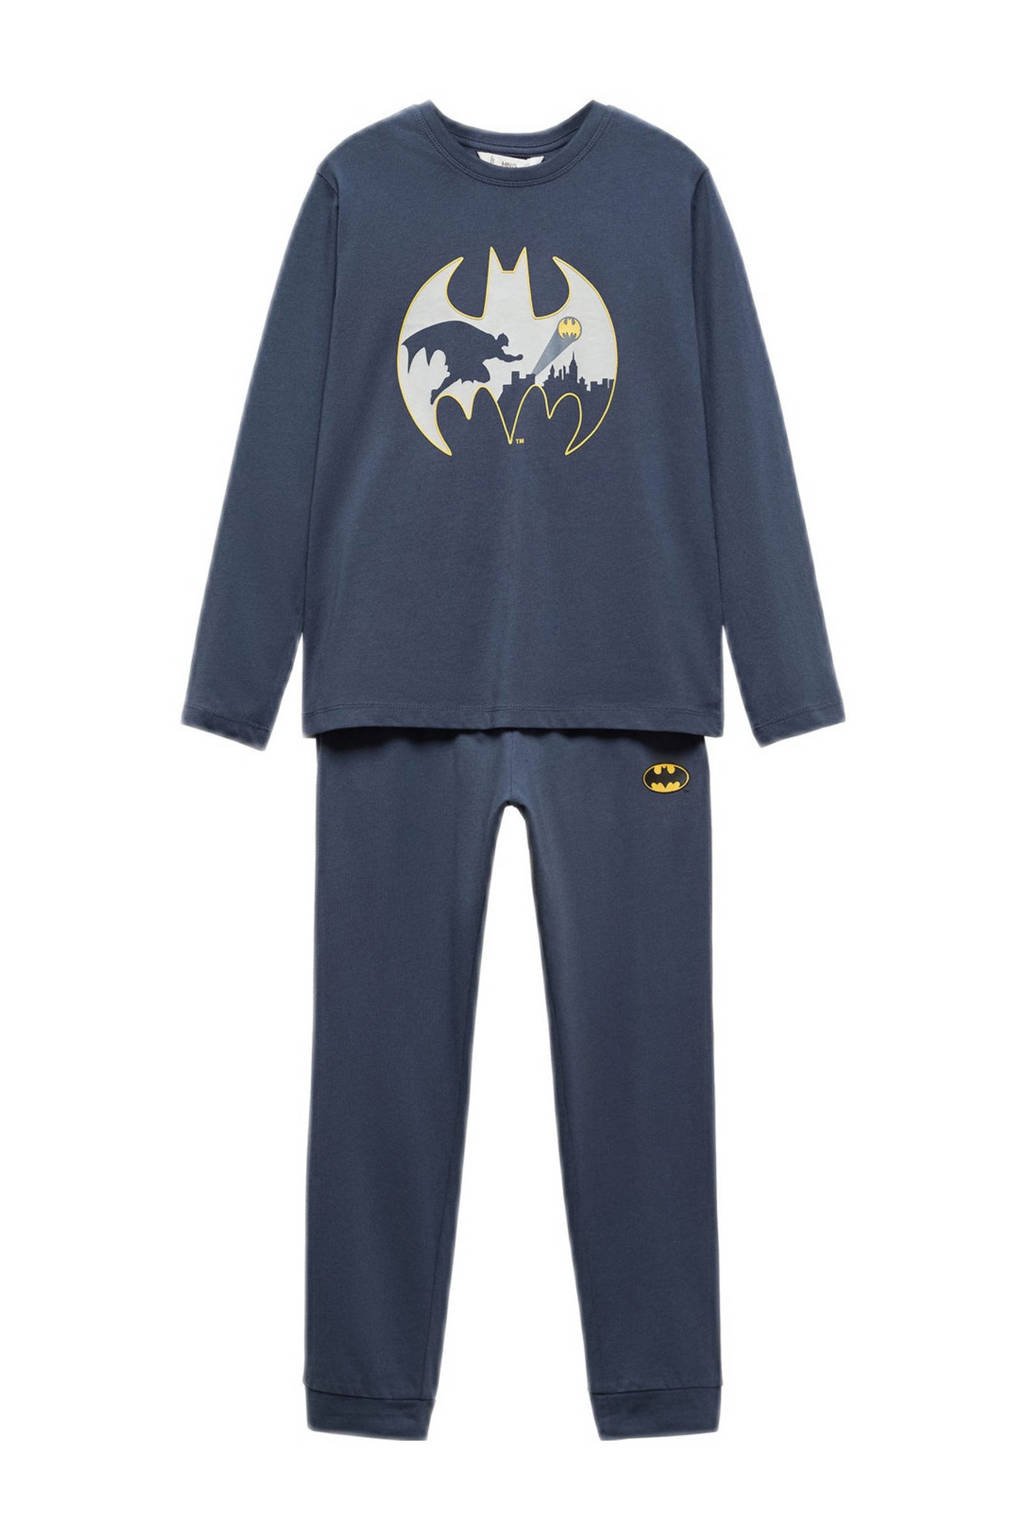 Batman pyjama met printopdruk donkerblauw